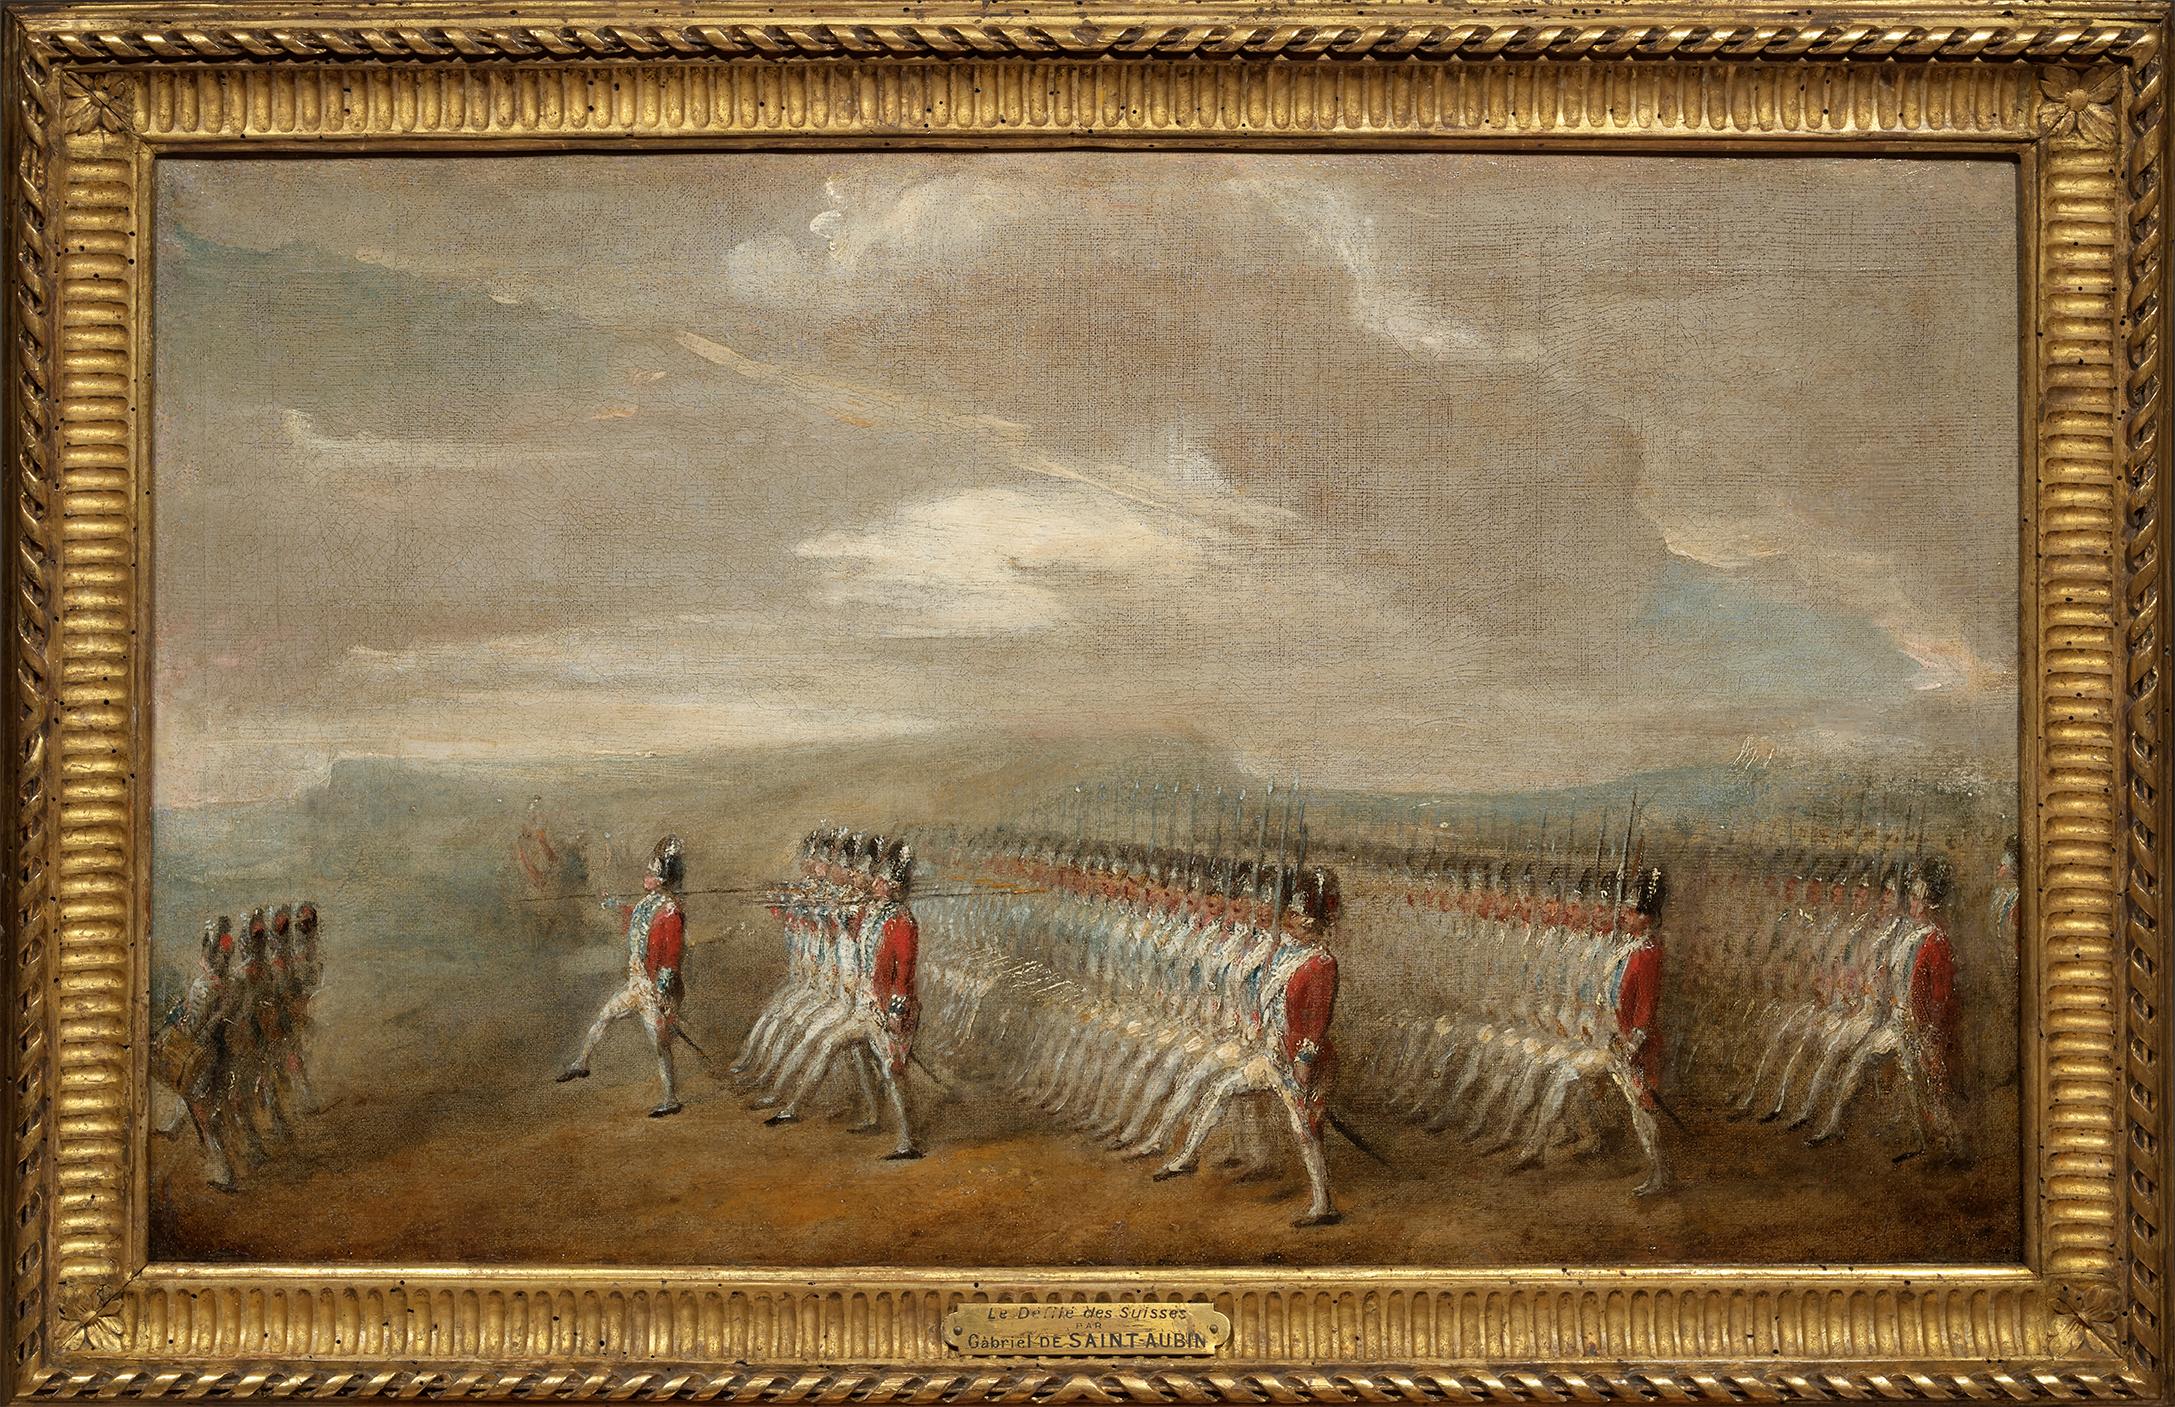 The Parade of Swiss Guards a painting on canvas by Gabriel de Saint-Aubin